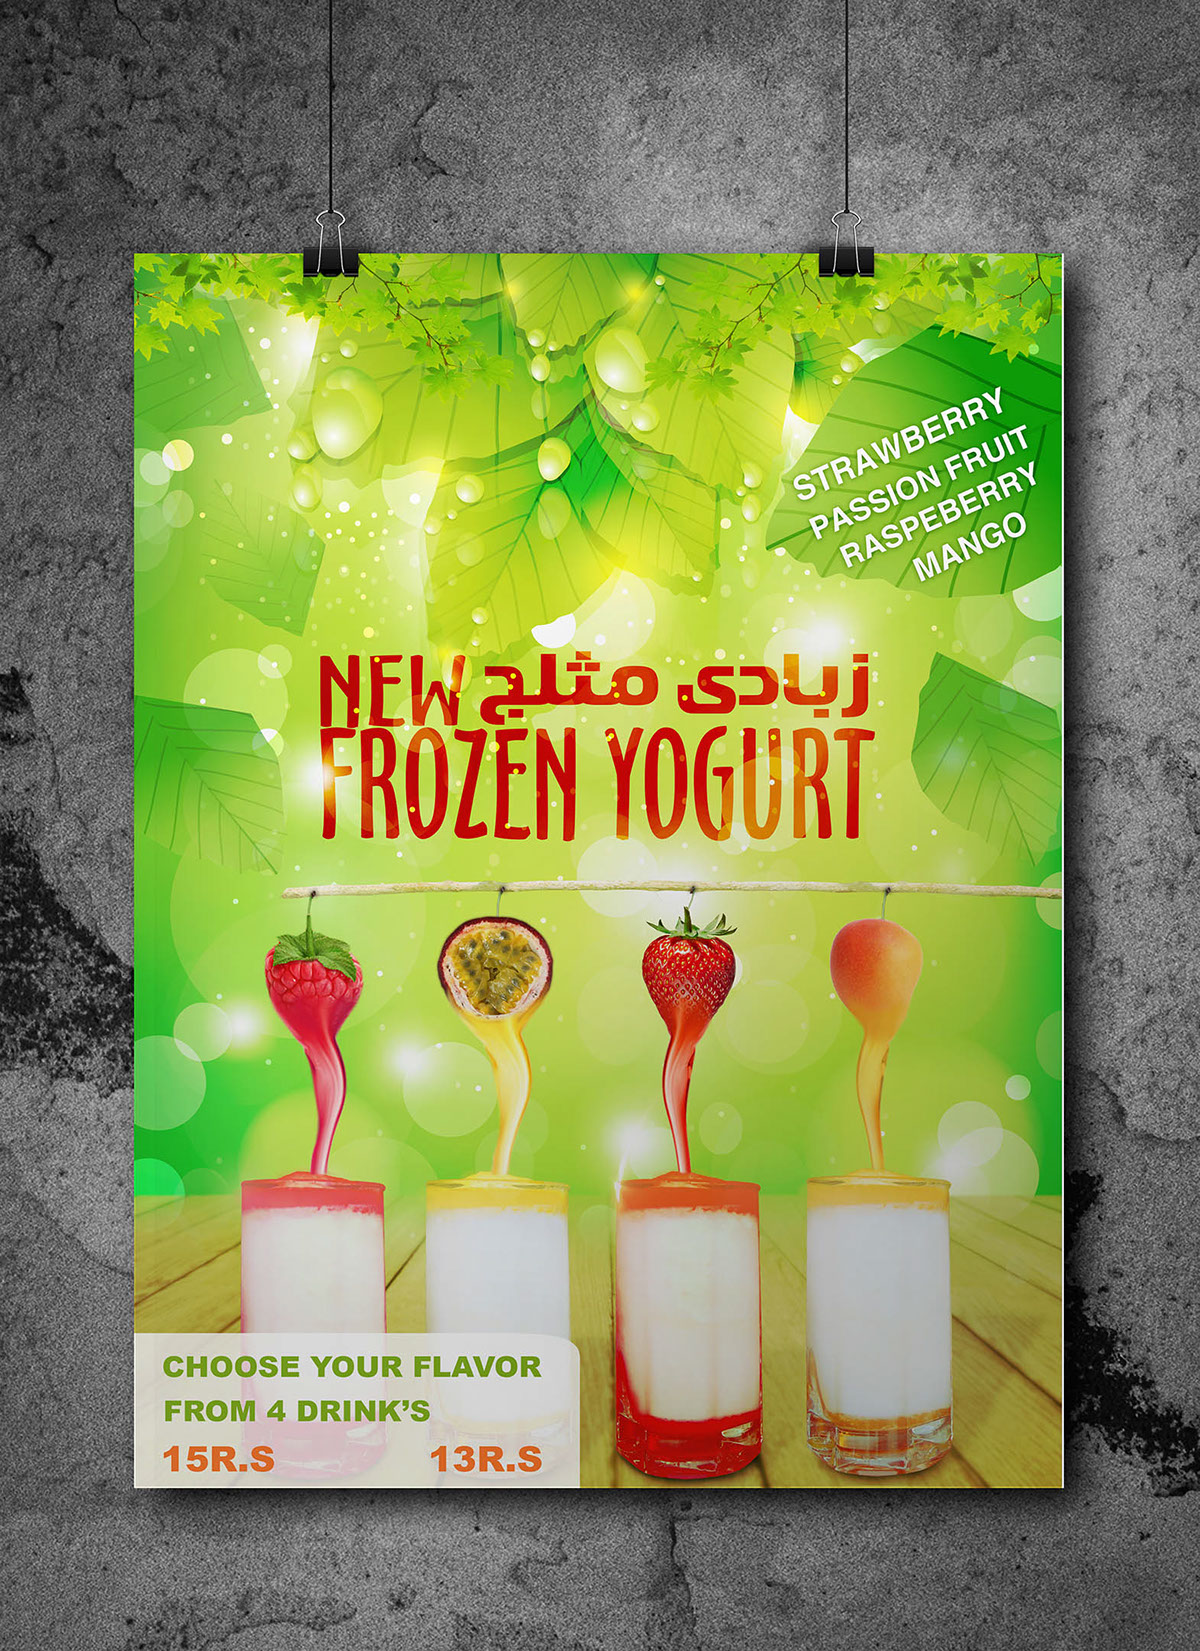 frozen yogurt FROZENYOGURT SWISSCAFE swiss cafe KSA cafe strawberry passion fruit Mango RASPEBERRY ahmedemad Ahmed Emad ahmed emad ali ahmedemadali flyer